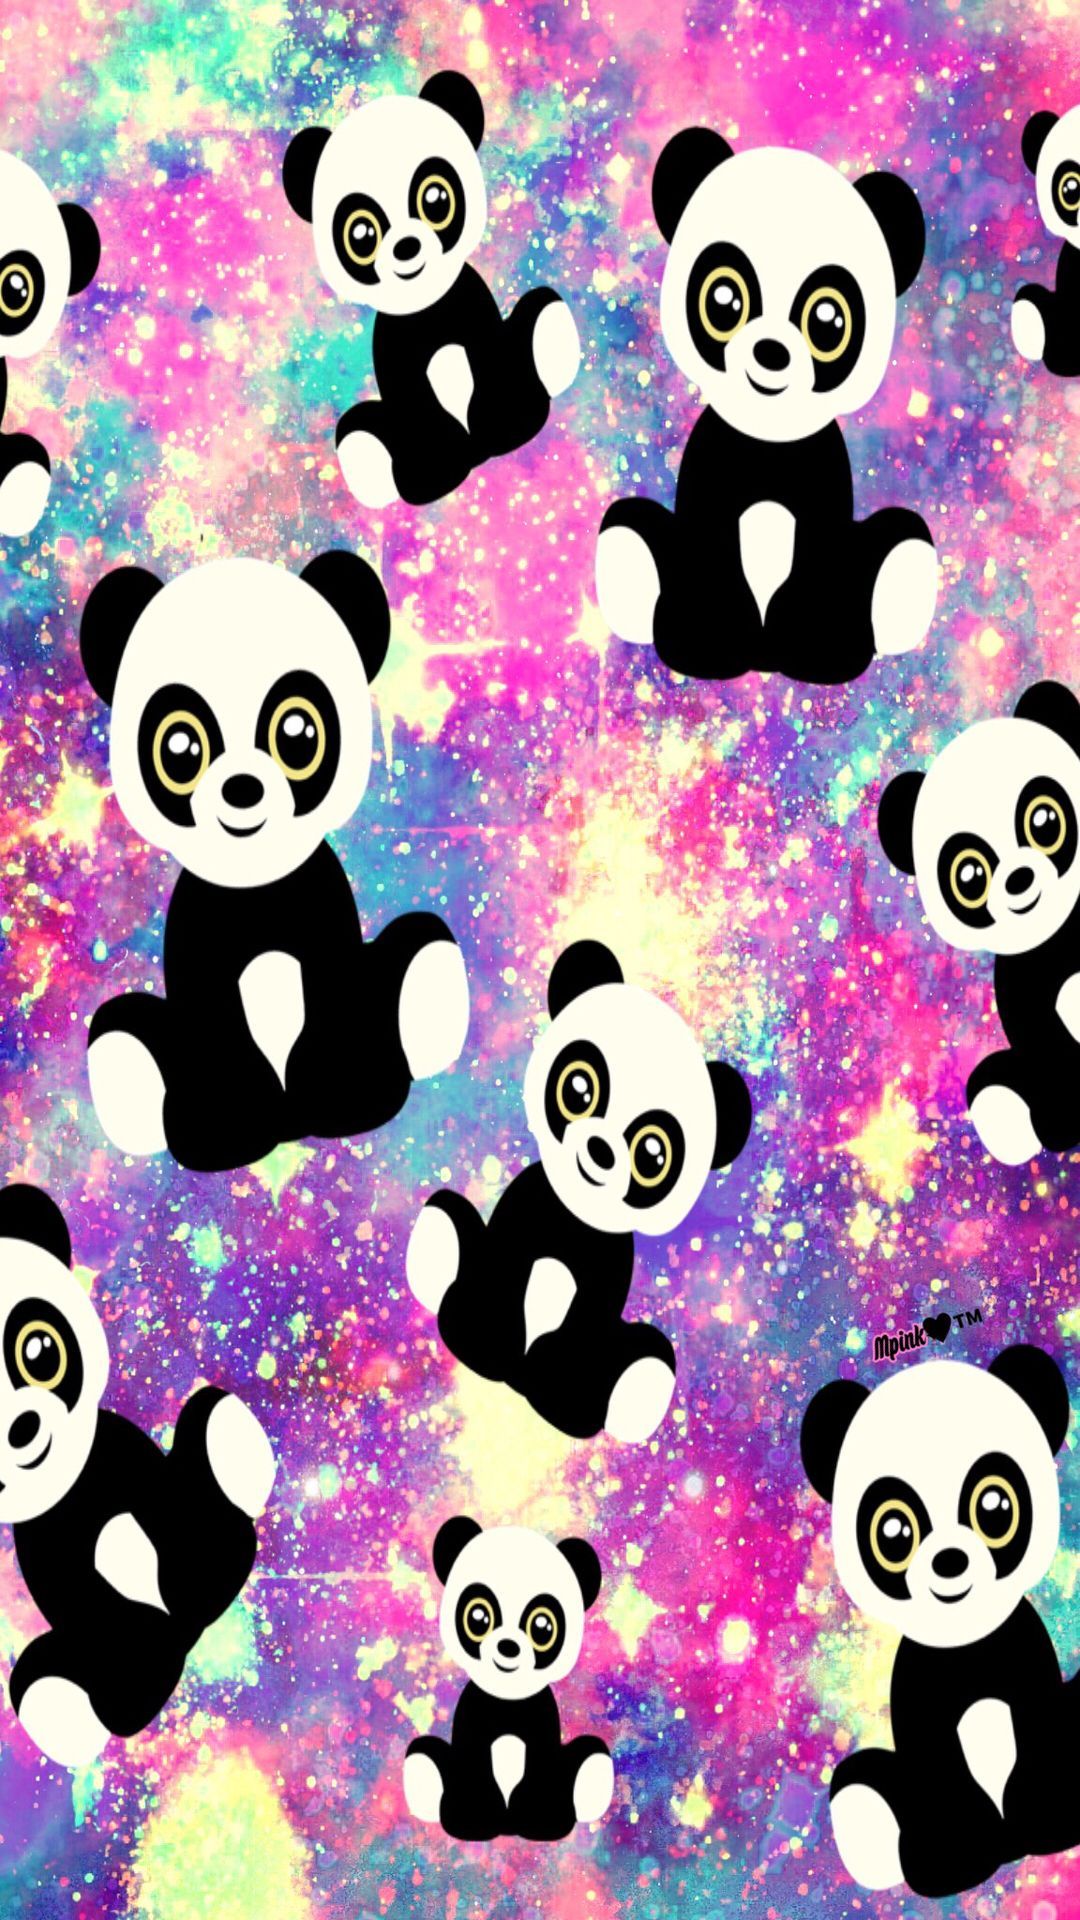 Cute Panda Galaxy Wallpaper #androidwallpaper #iphonewallpaper #wallpaper #galaxy #sparkle #glitter #lockscreen #pr. Cute wallpaper, Galaxy wallpaper, Panda love